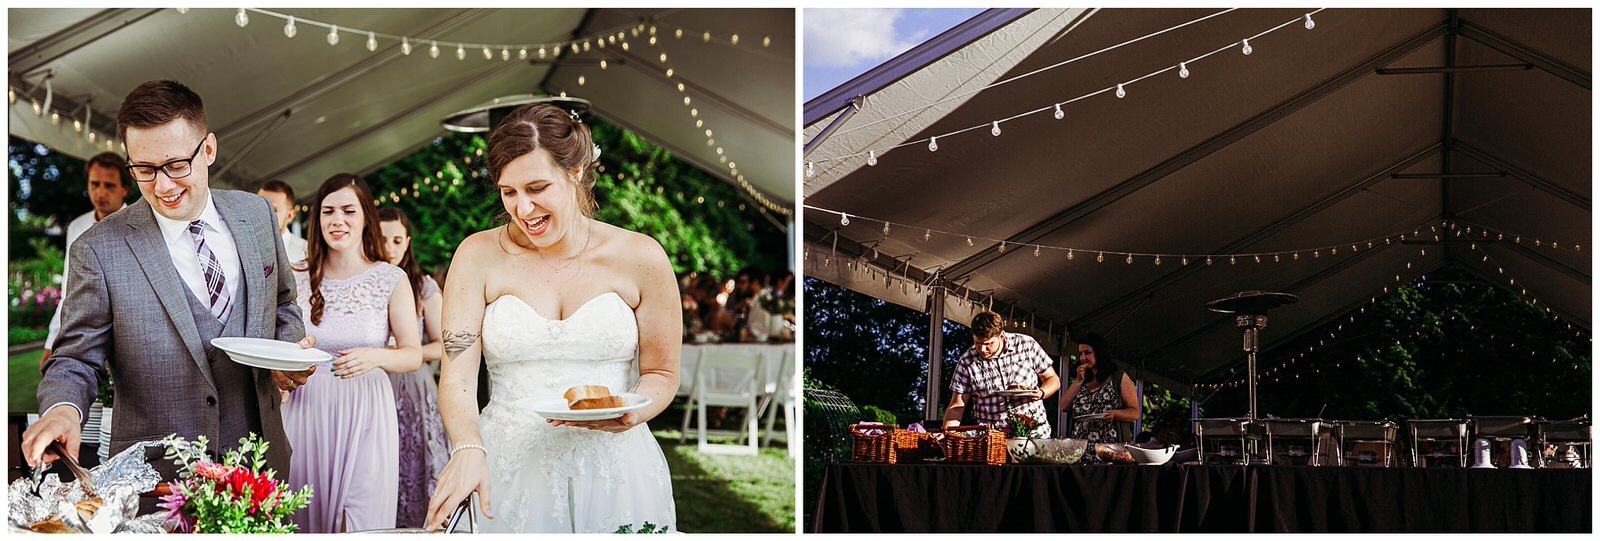 reception+backyard+wedding+fraser+valley+photos (16).jpg